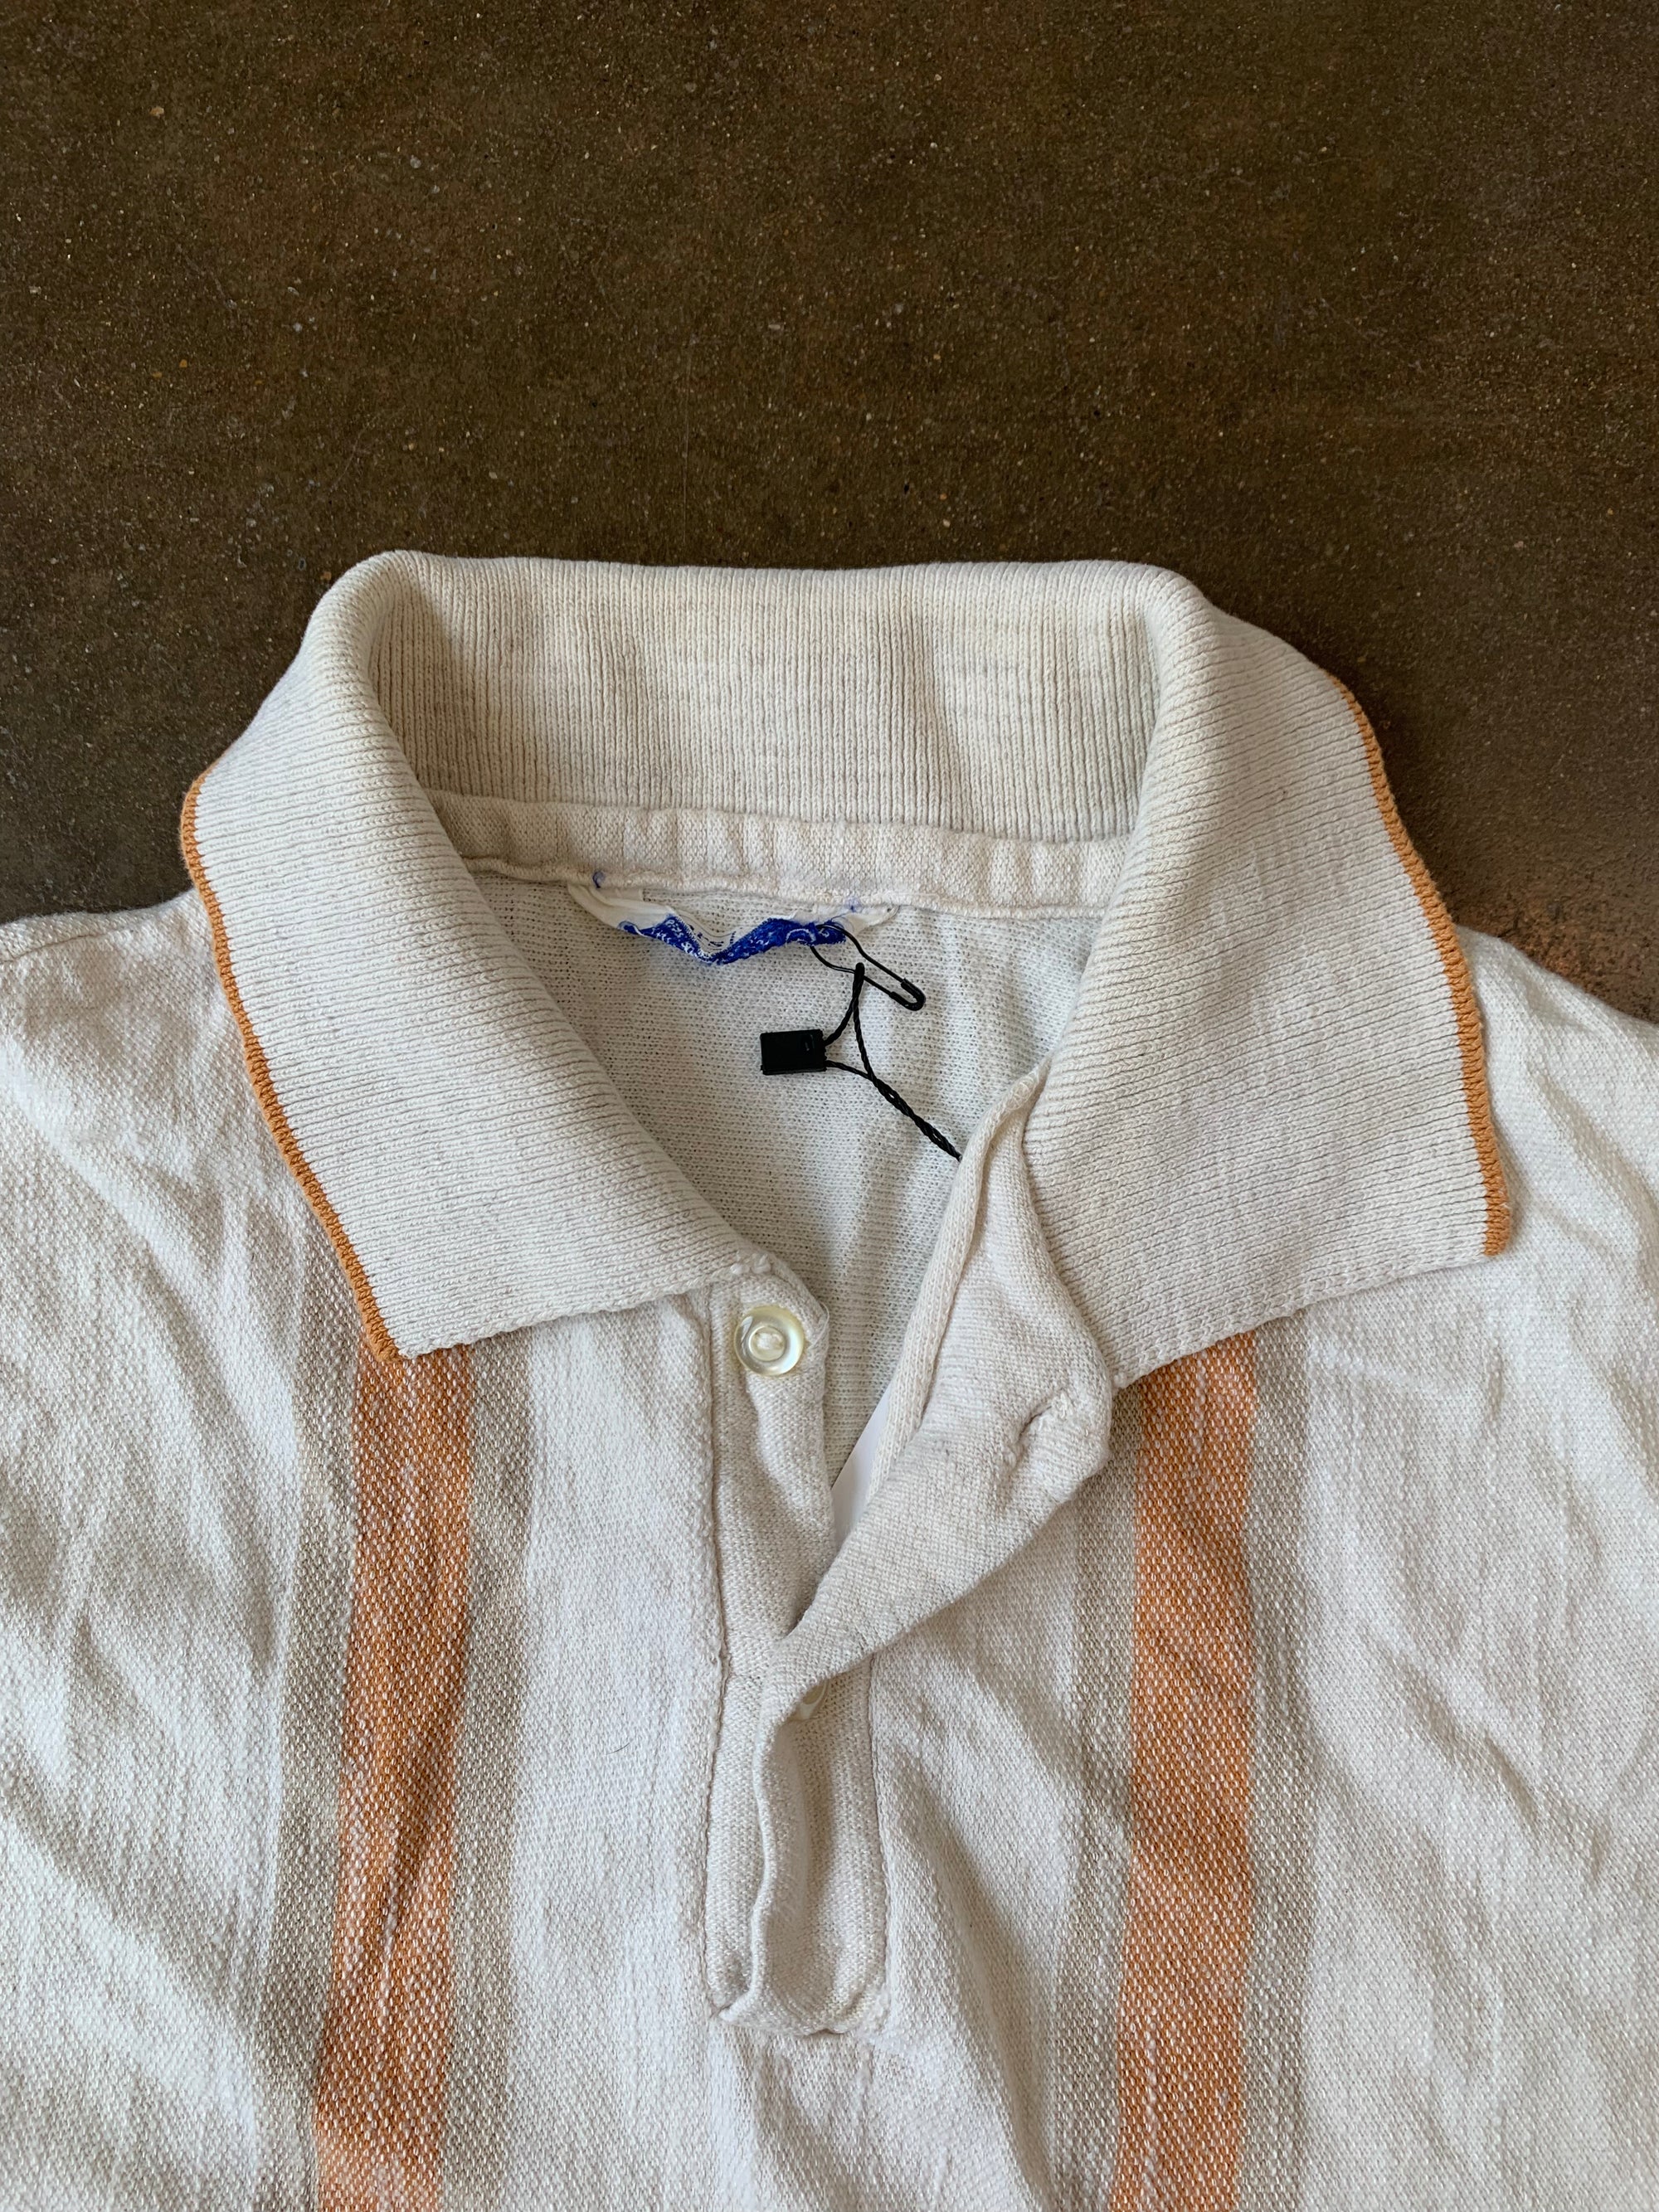 Vintage Sears Knit Sport Shirt